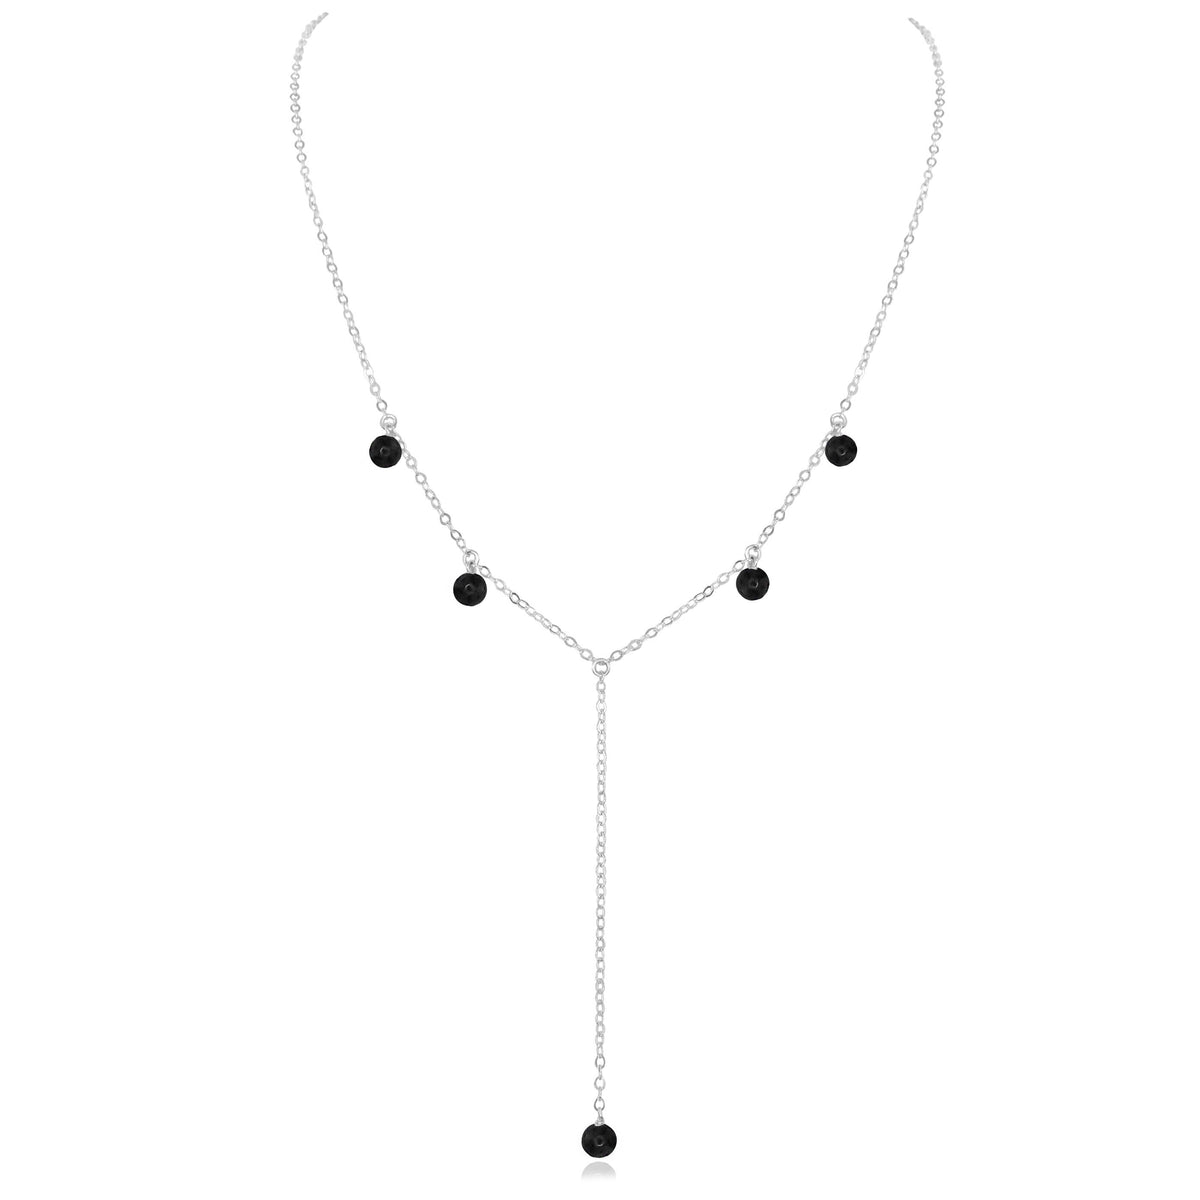 Boho Y Necklace - Black Tourmaline - Sterling Silver - Luna Tide Handmade Jewellery